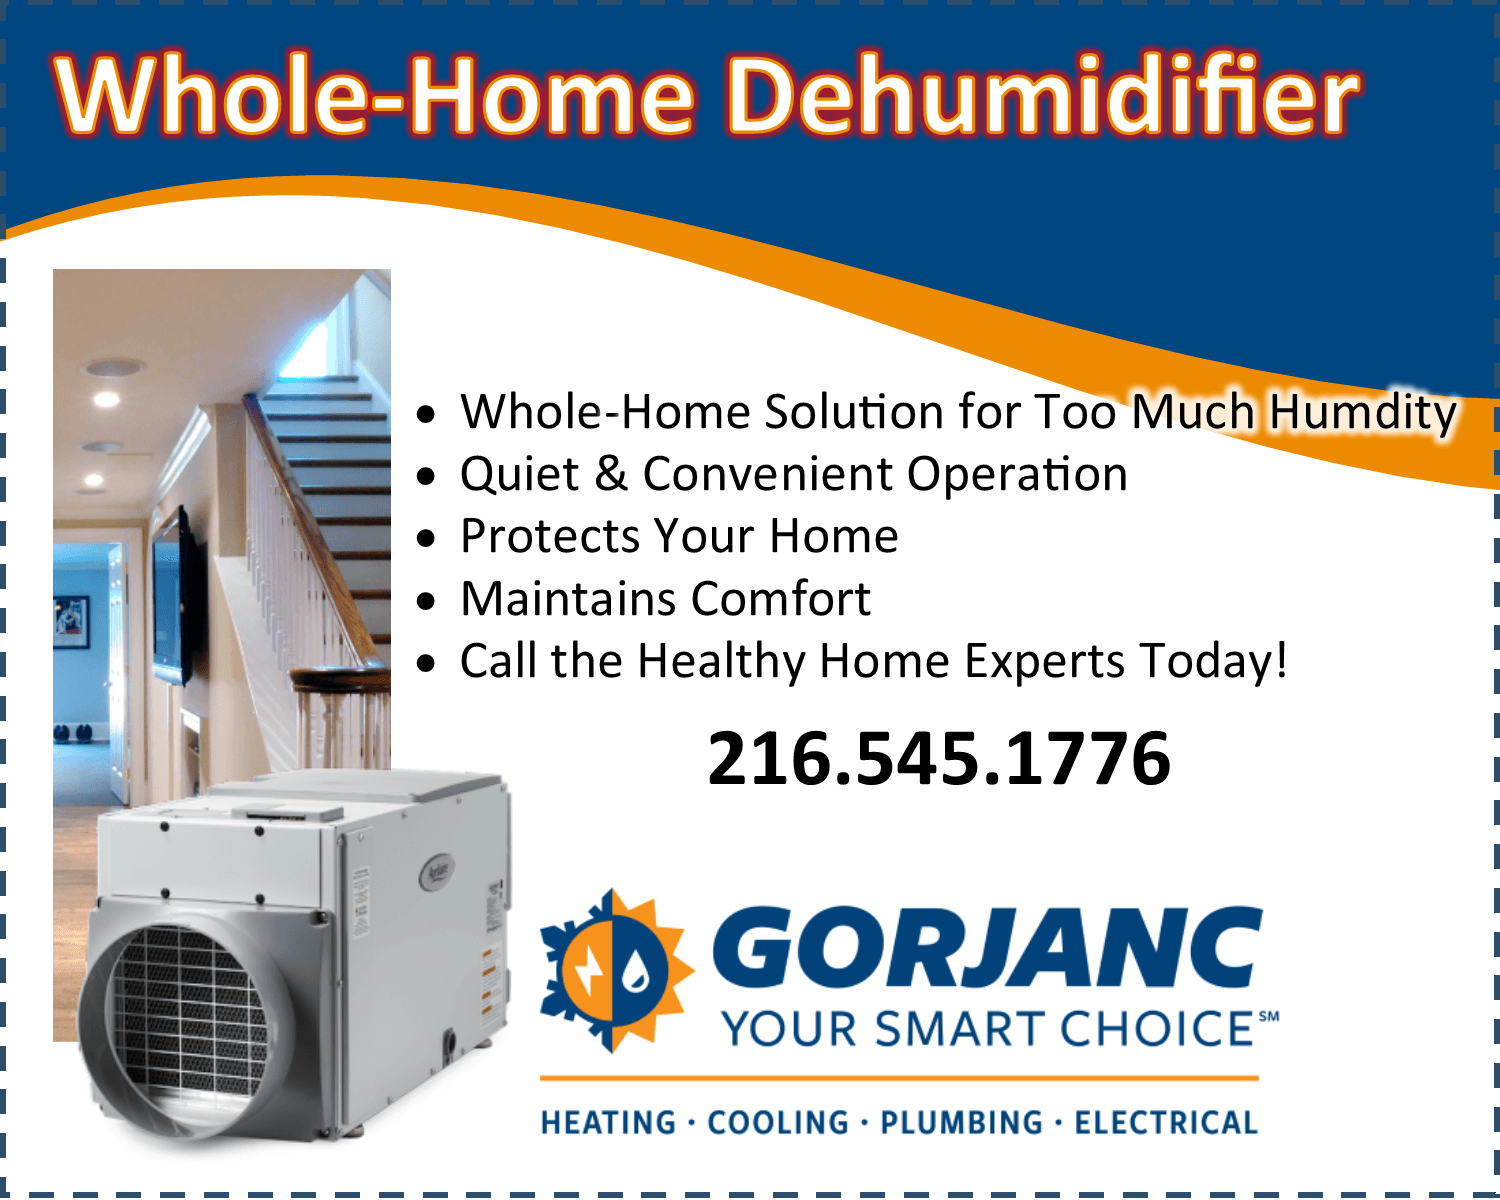 Gorjanc Whole-Home Dehumidifiers